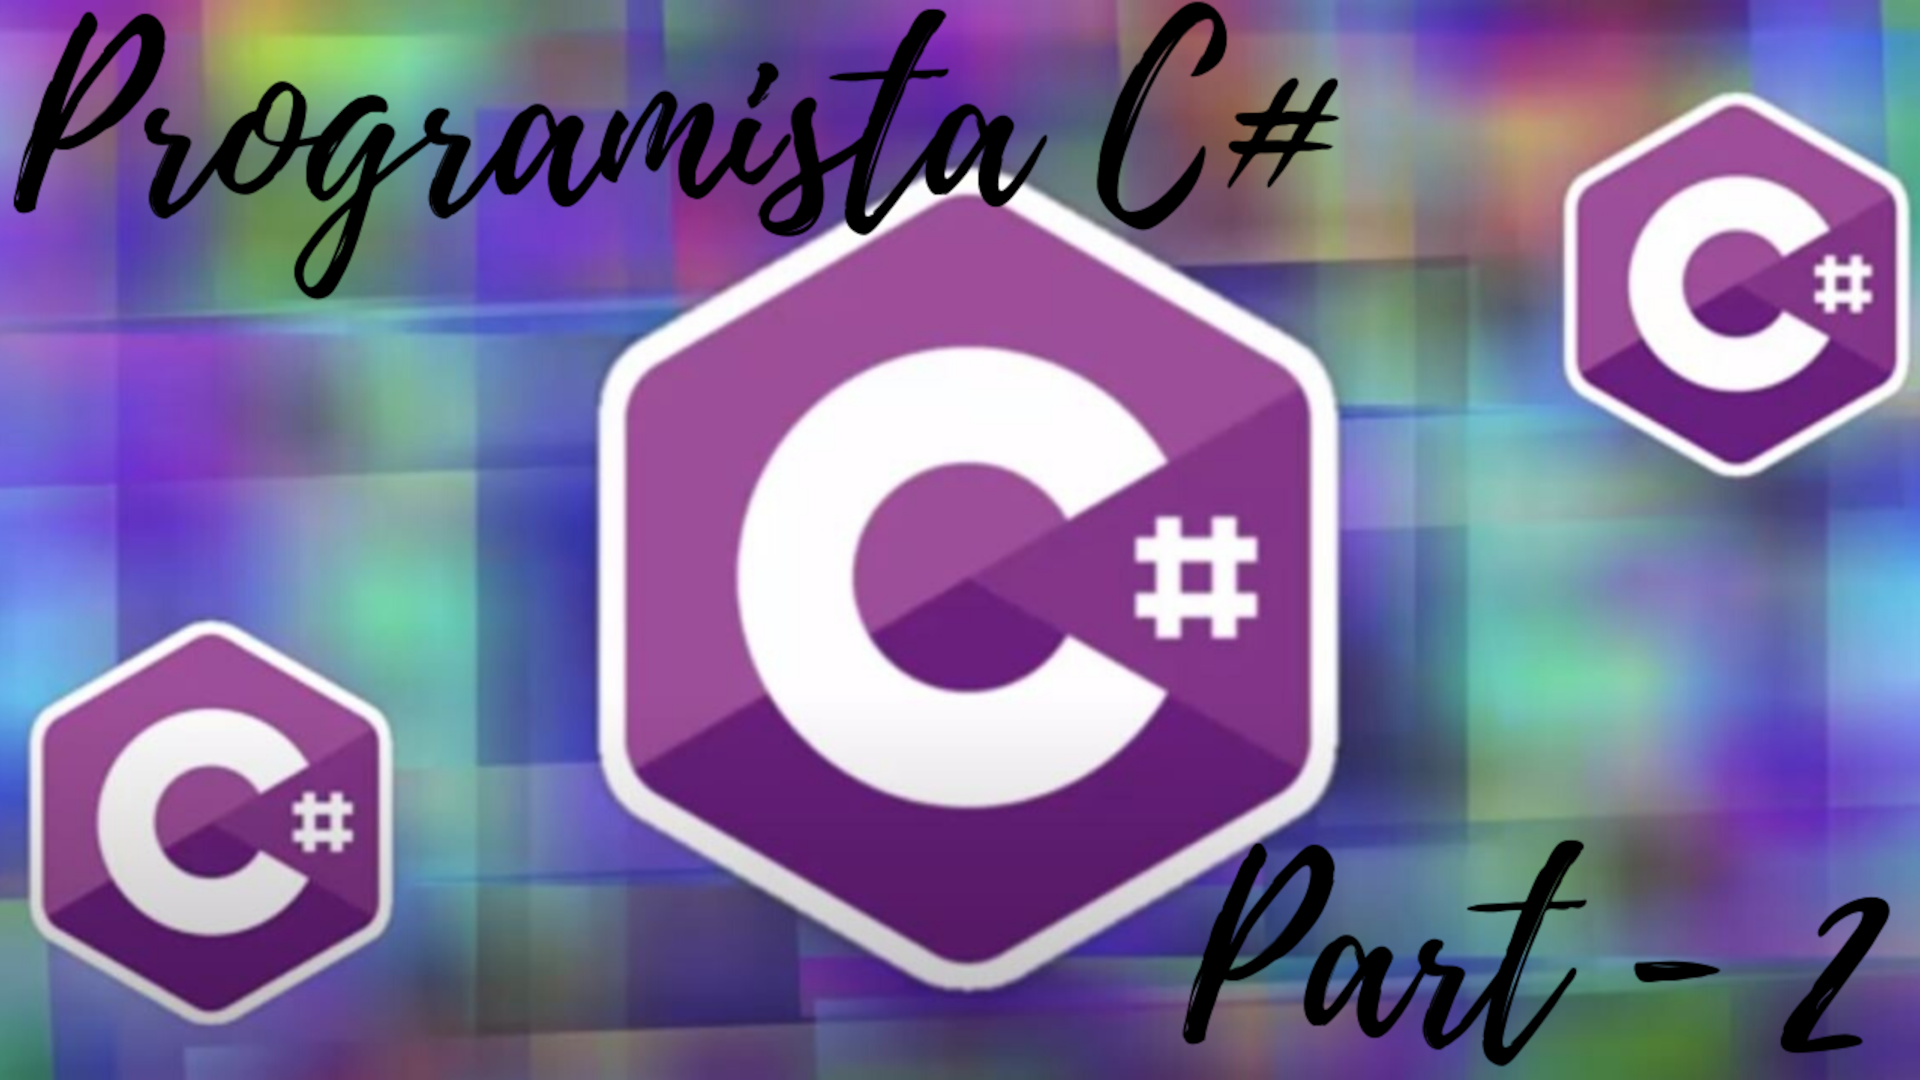 Programista C# Part2